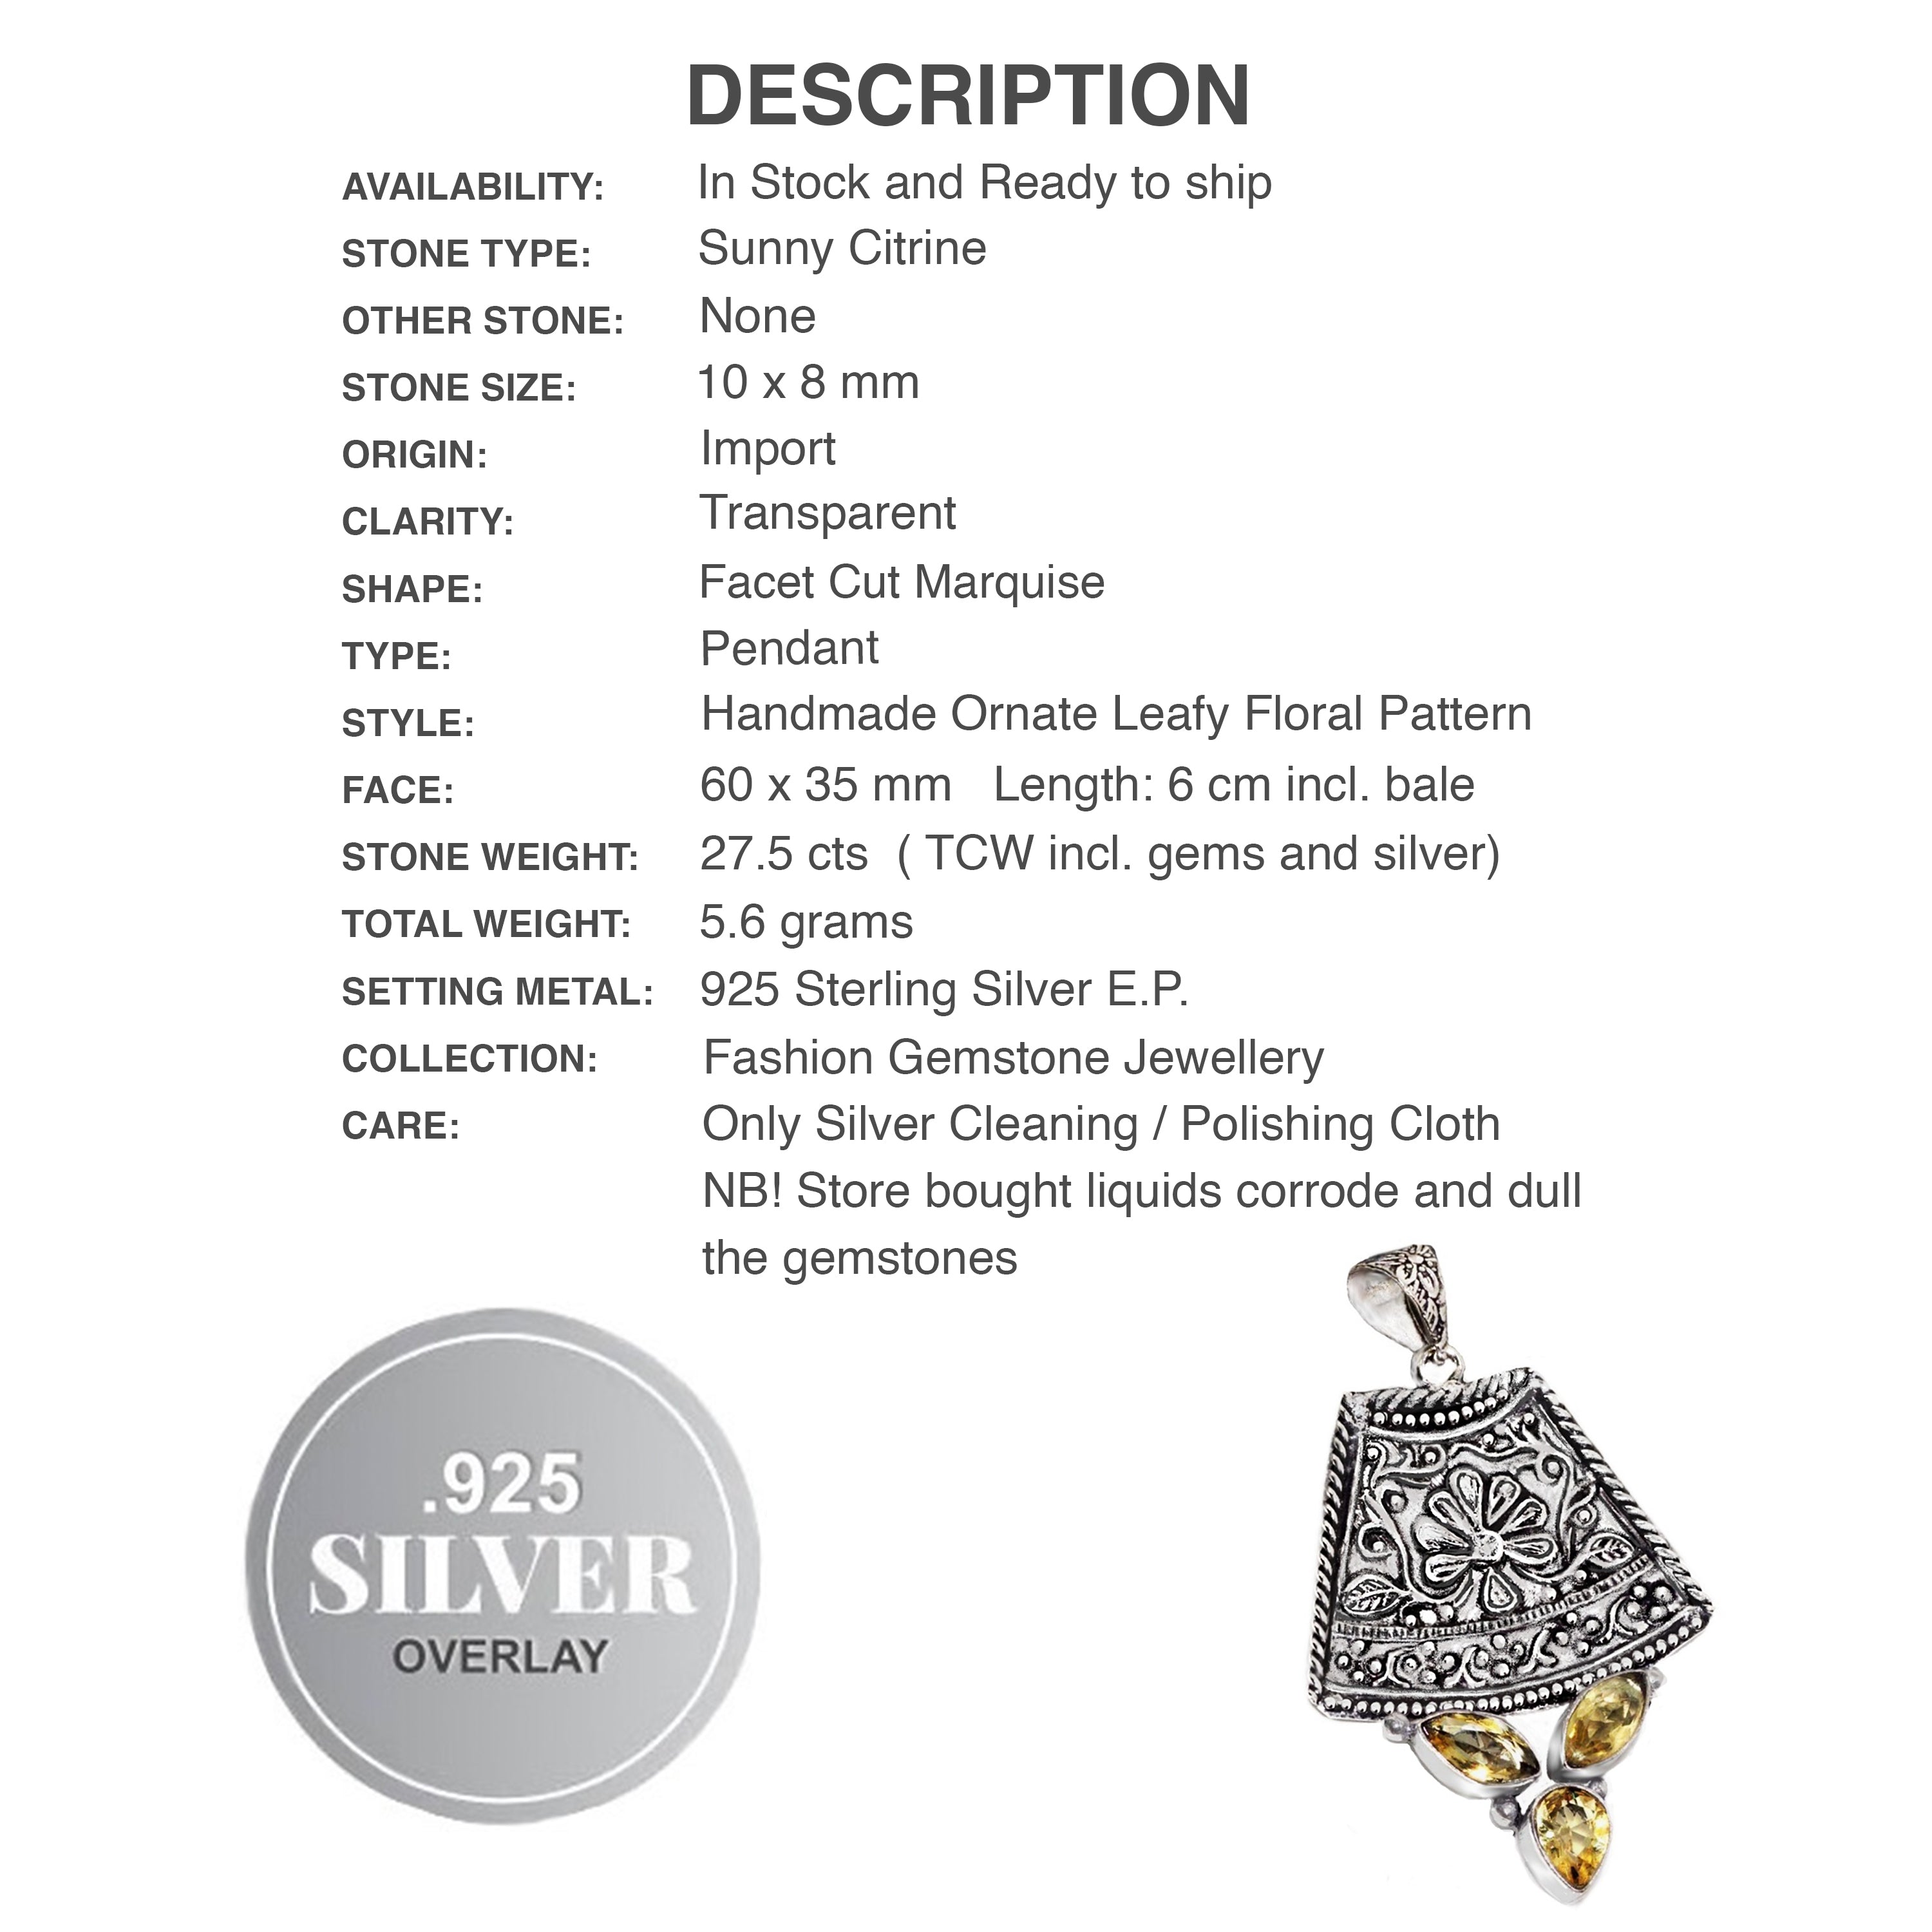 Handmade Ornate Sunny Citrine Marquise Gemstone Pendant in 925 Sterling Silver